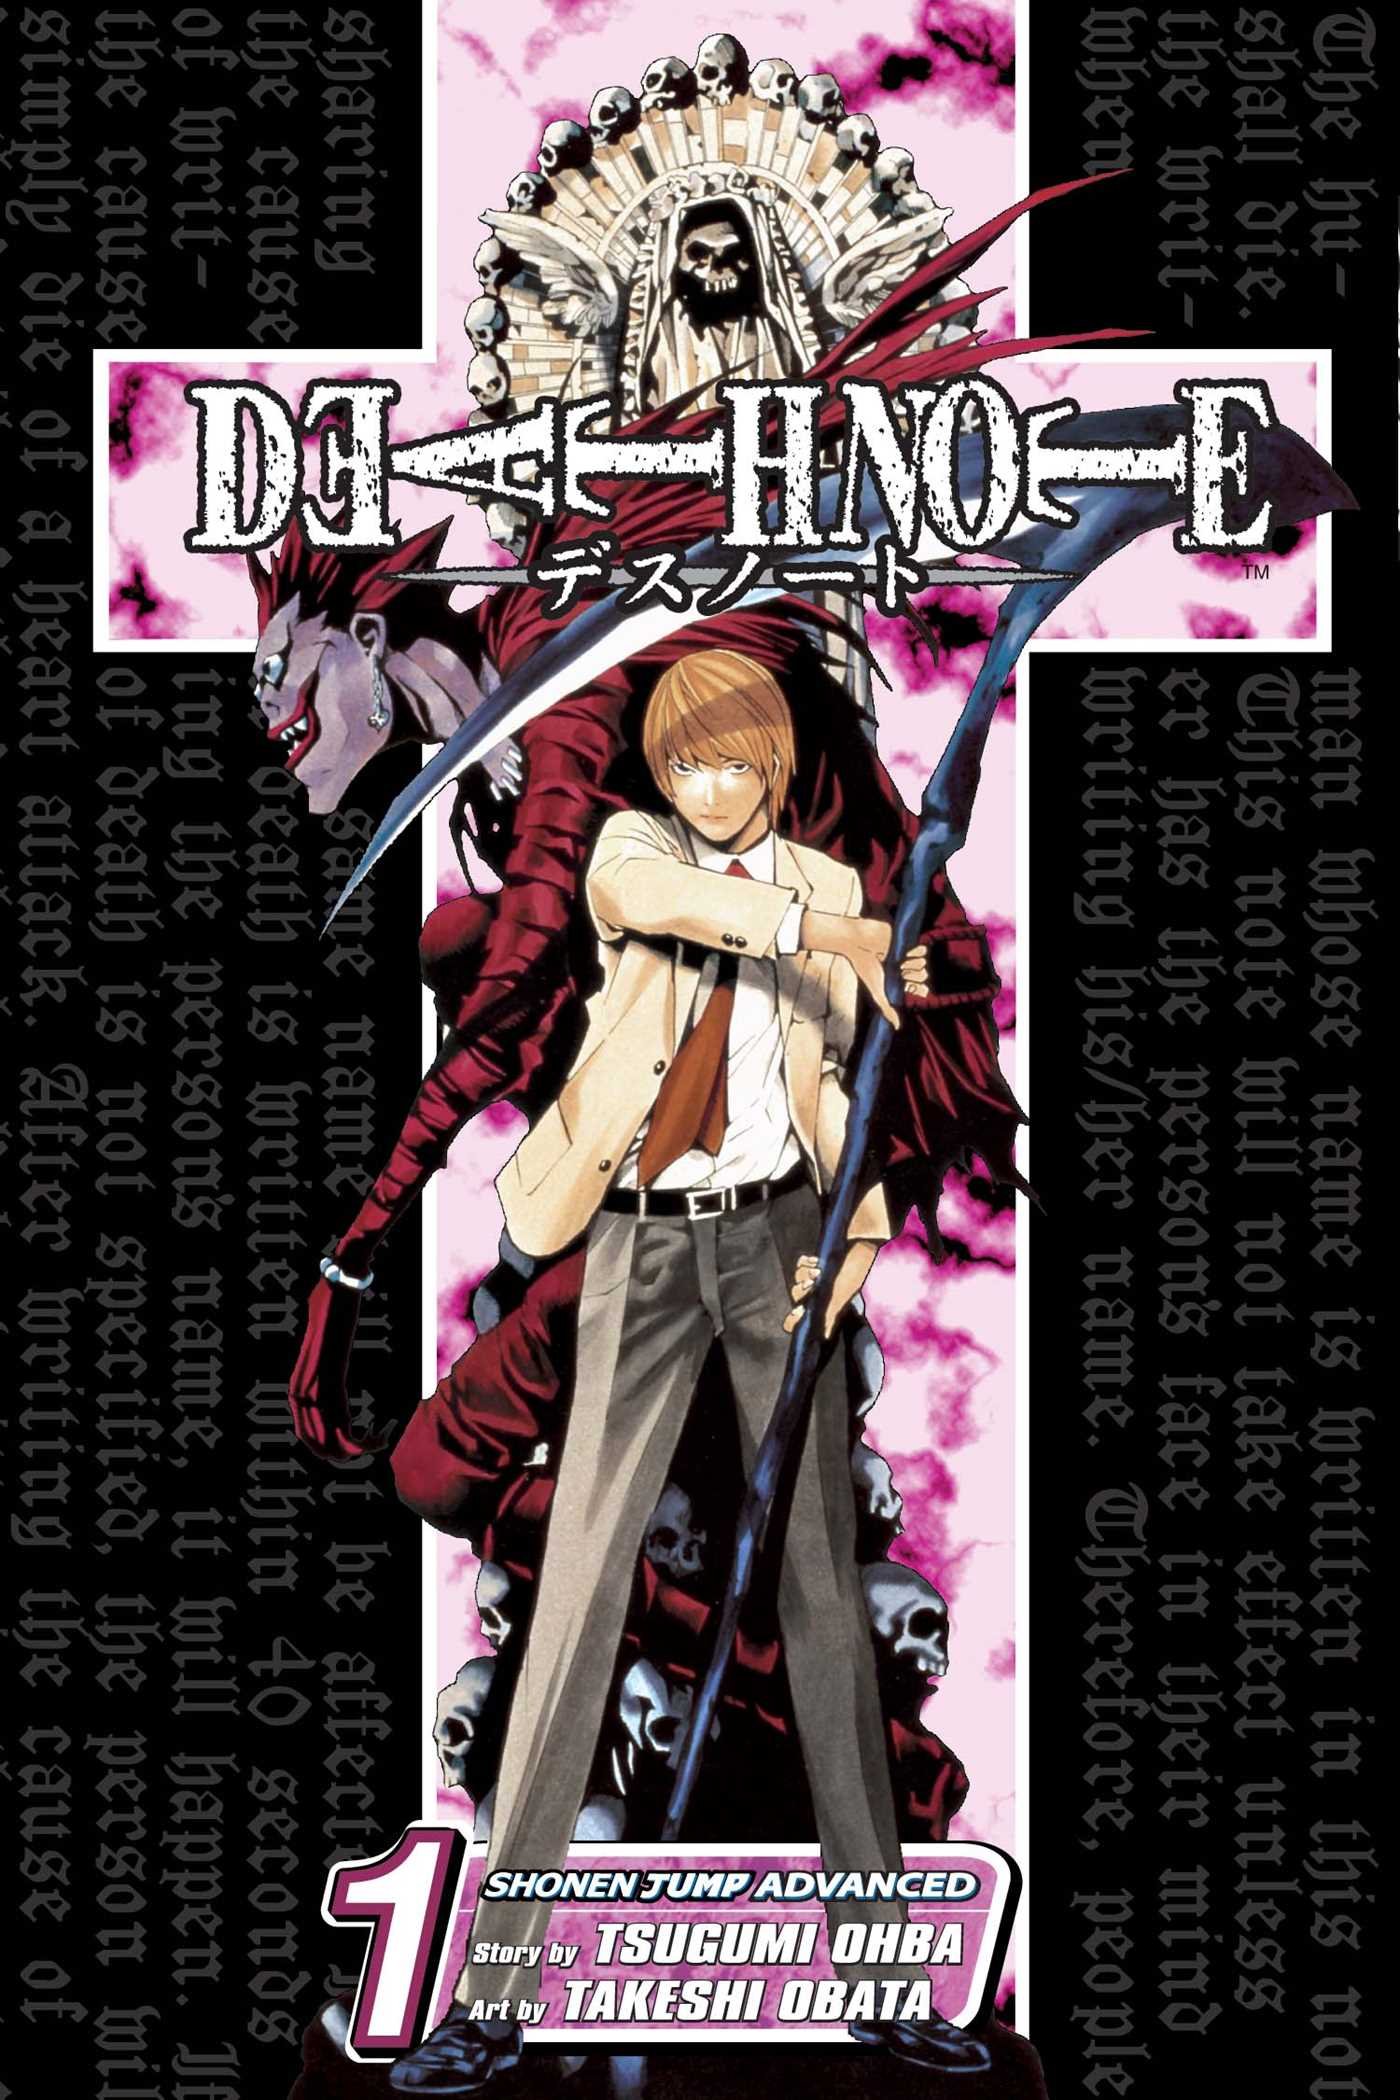 Death Note manga cover